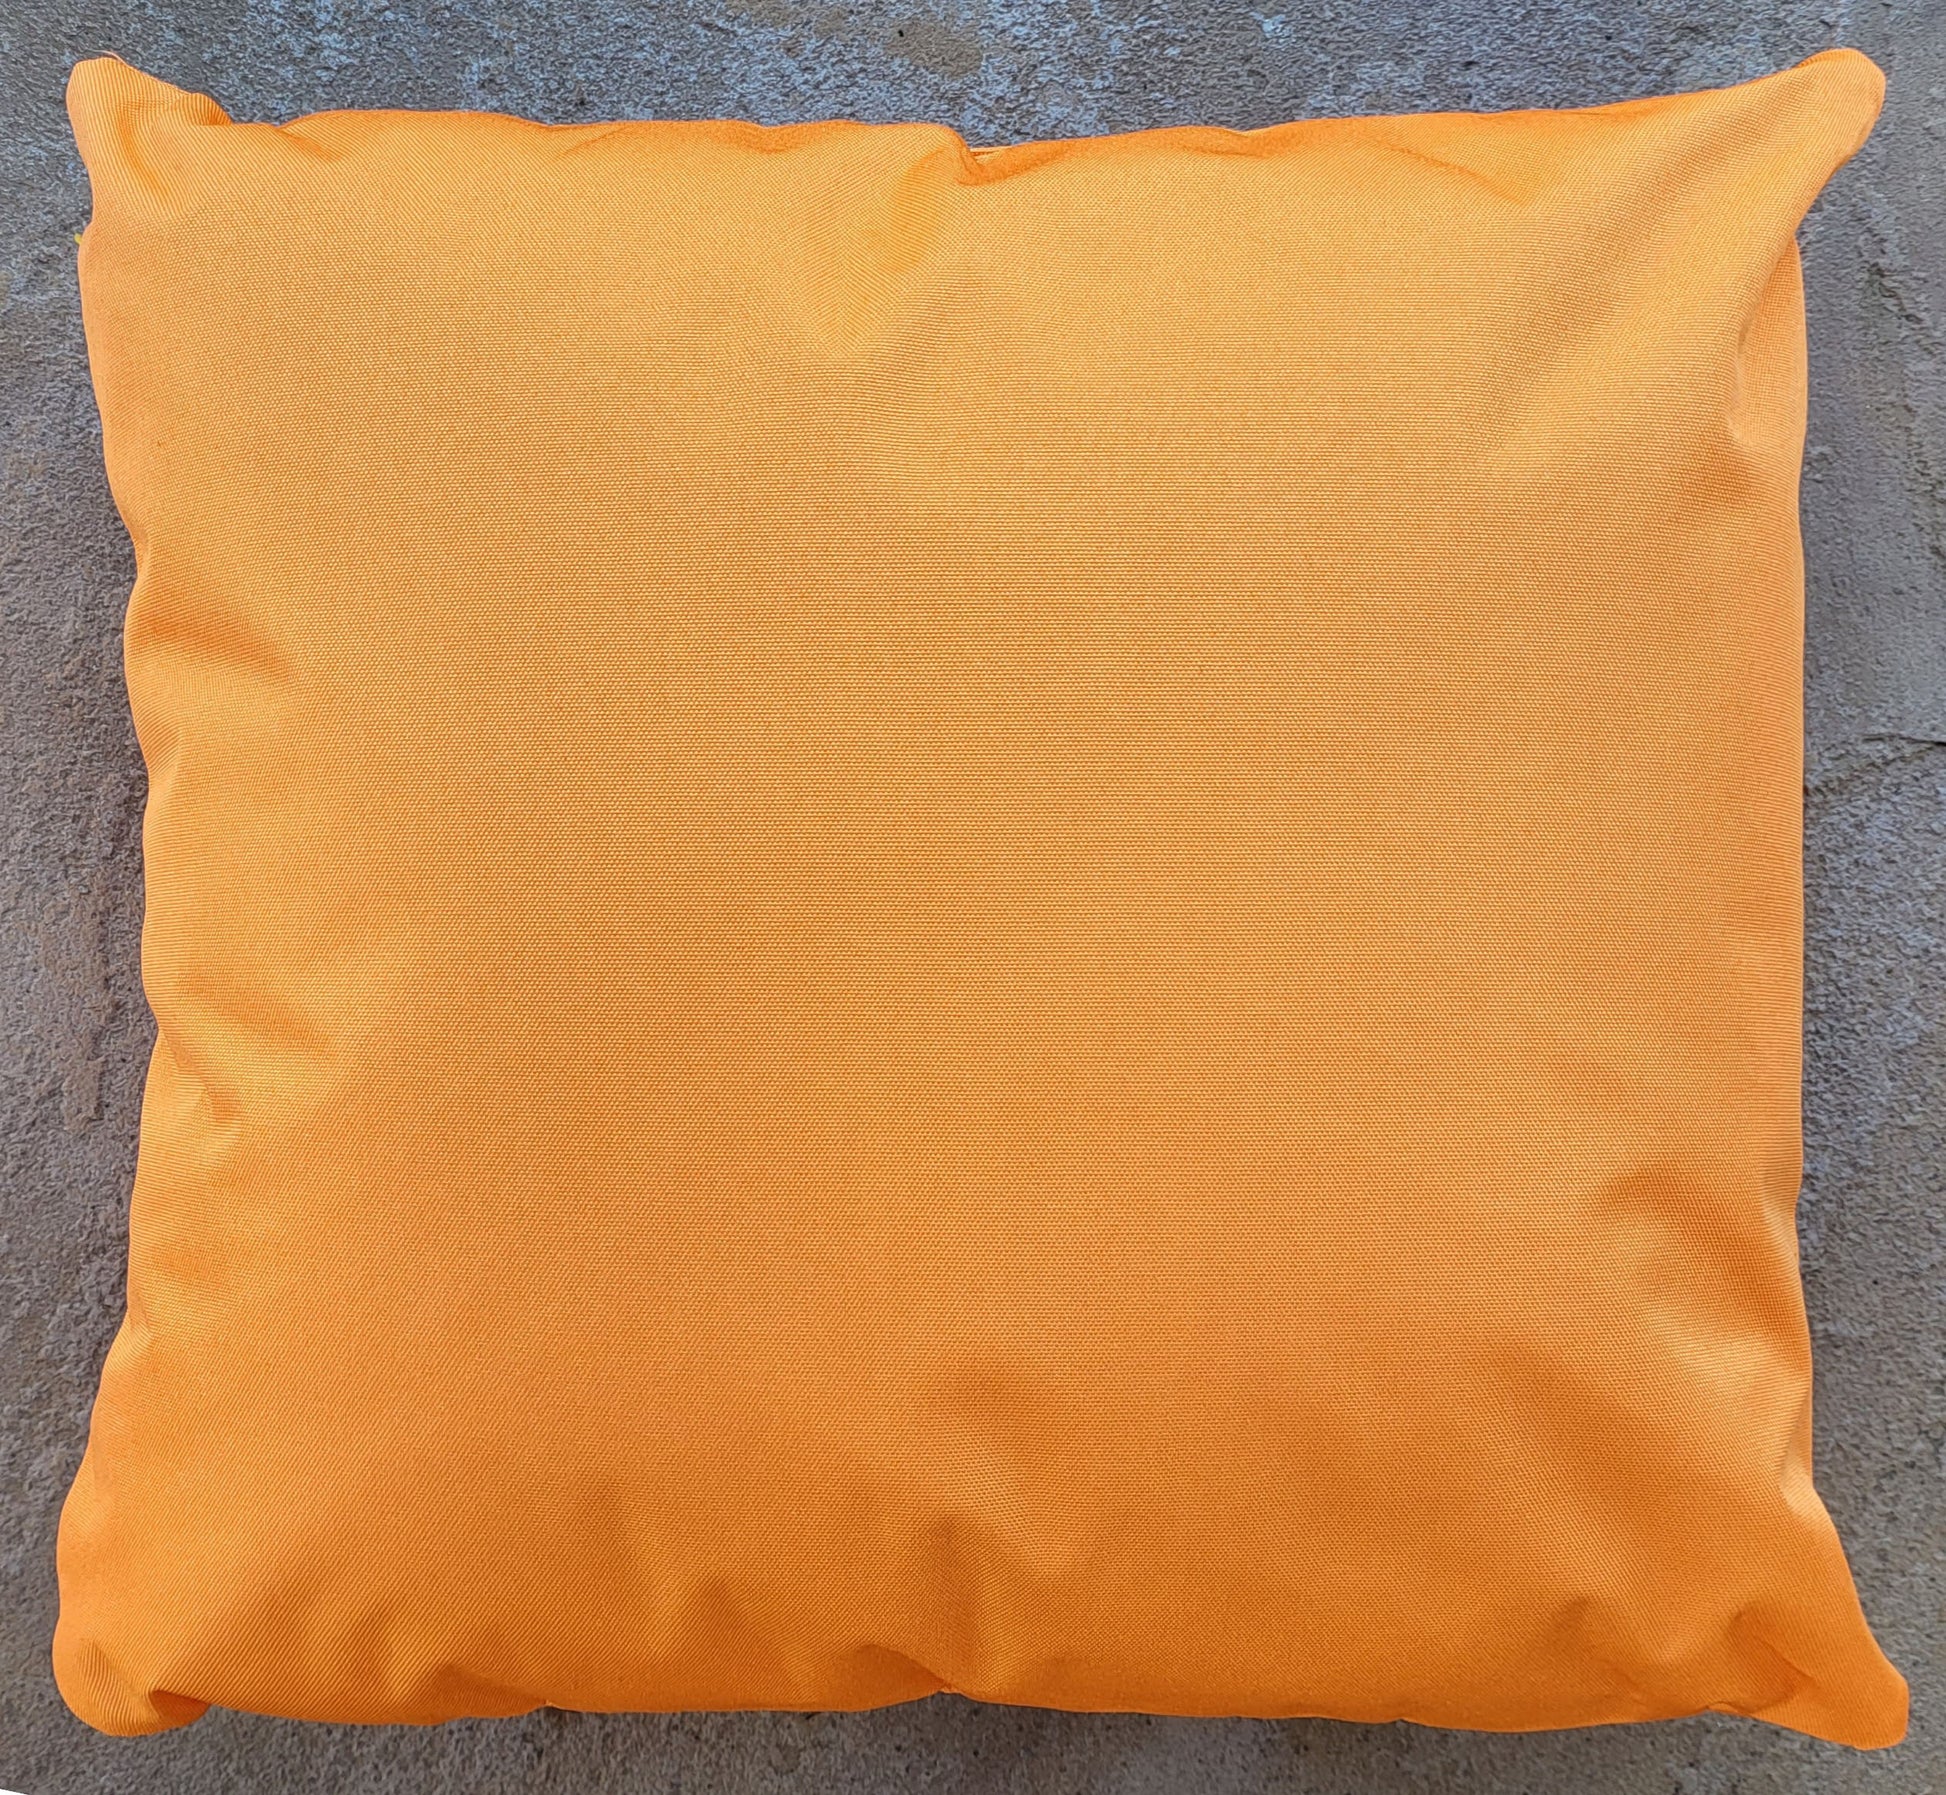 Outdoor Waterproof Garden Rattan Chair Cushions Or Covers Orange